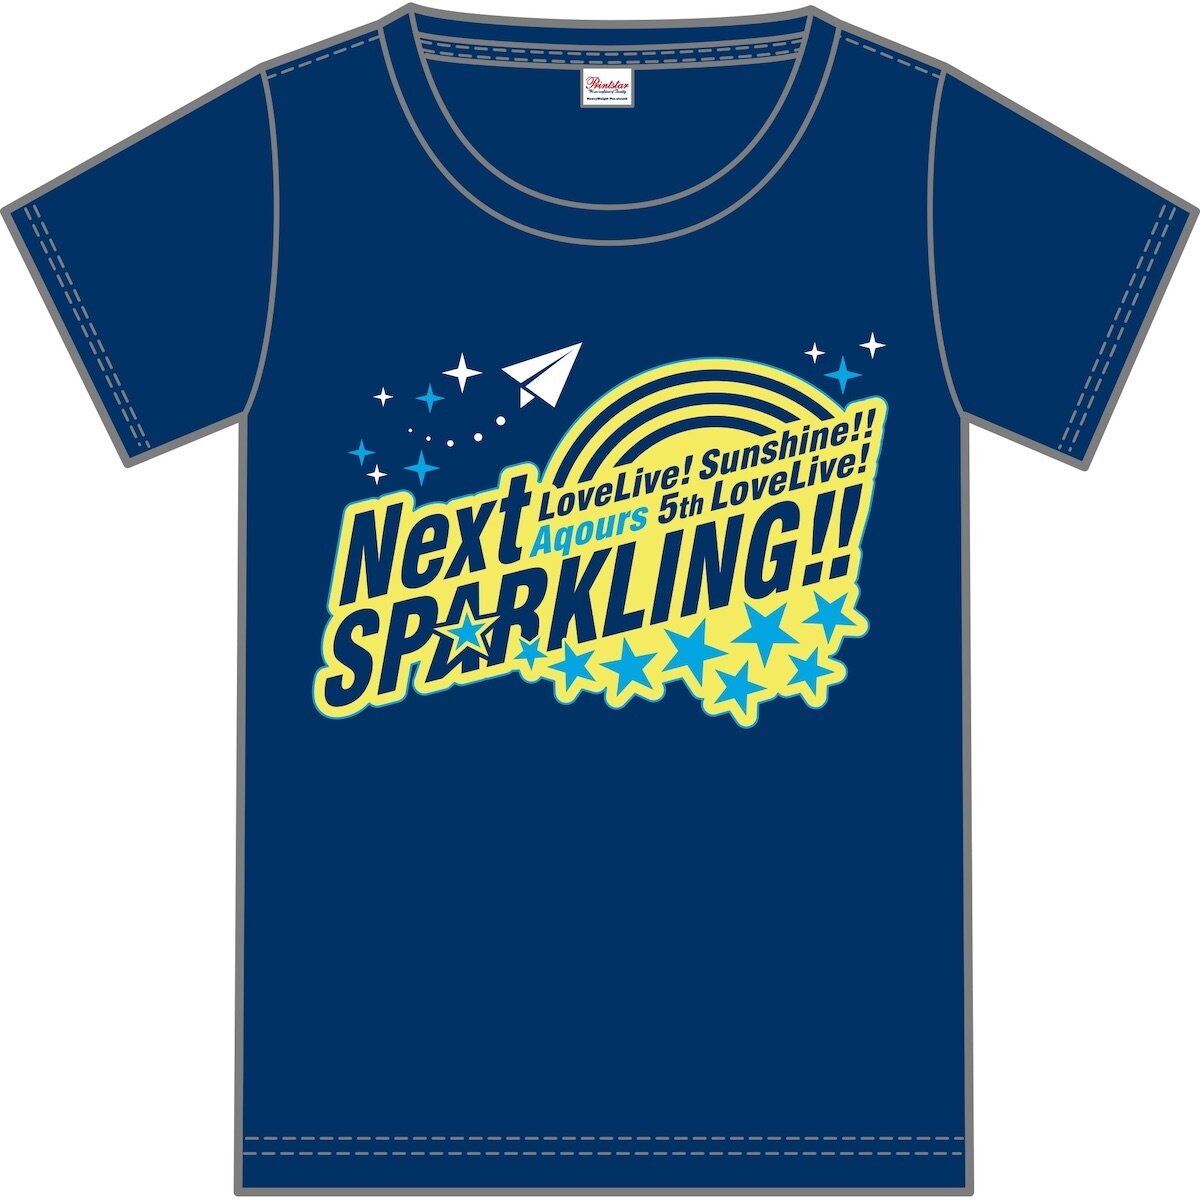 Love Live! Sunshine!! Aqours 5th Love Live! -Next Sparkling!!- T-Shirt